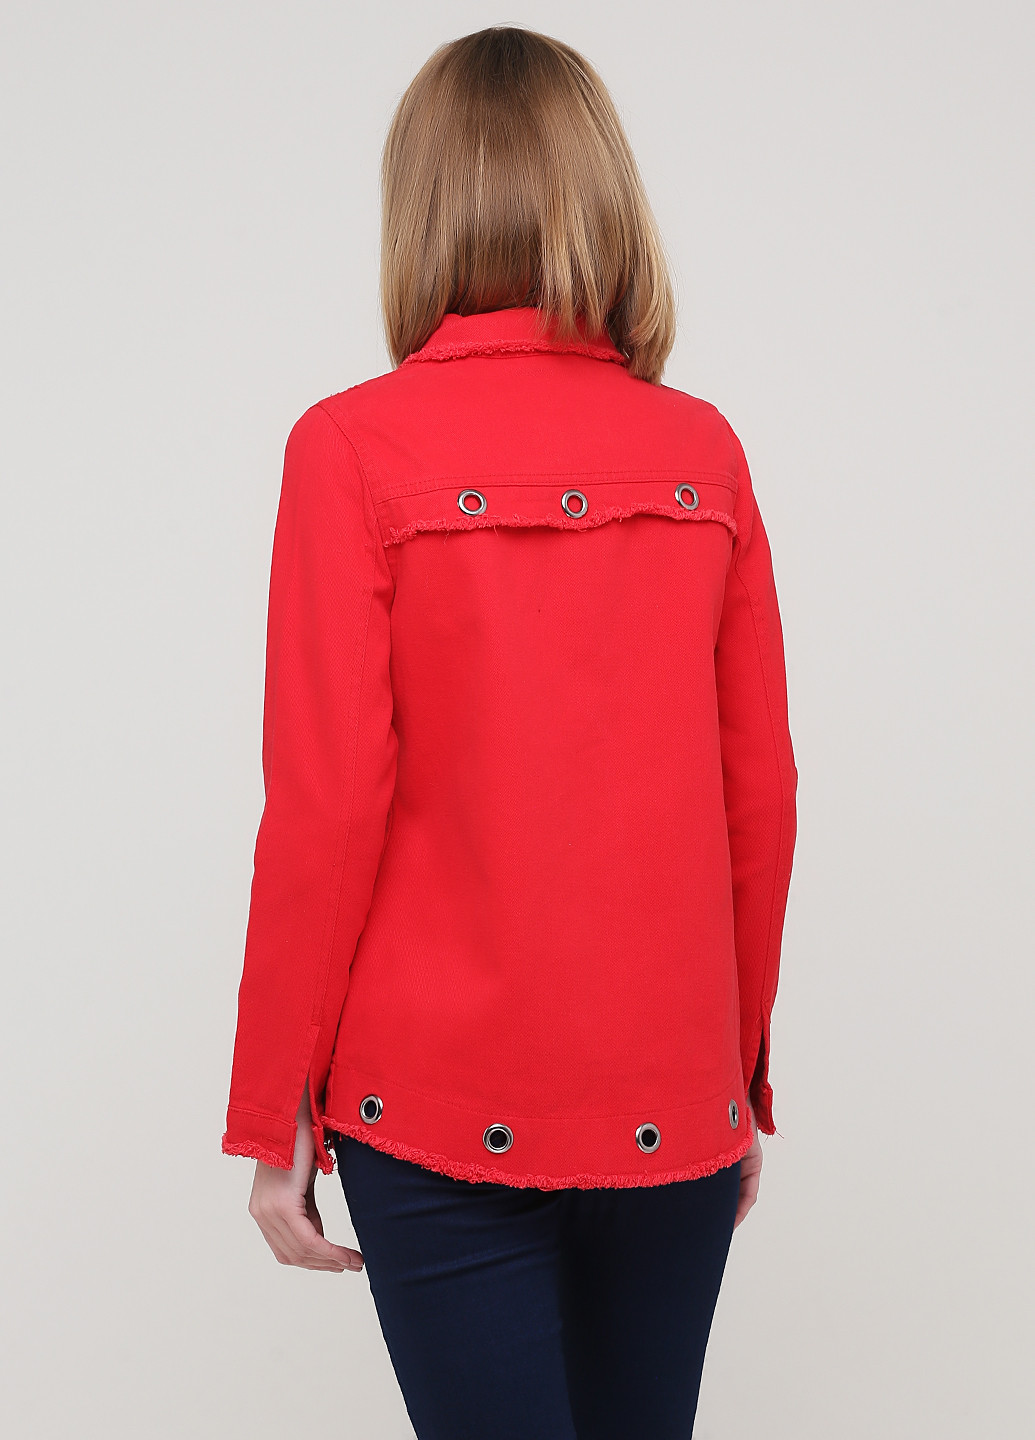 Красная демисезонная куртка Made in Italy